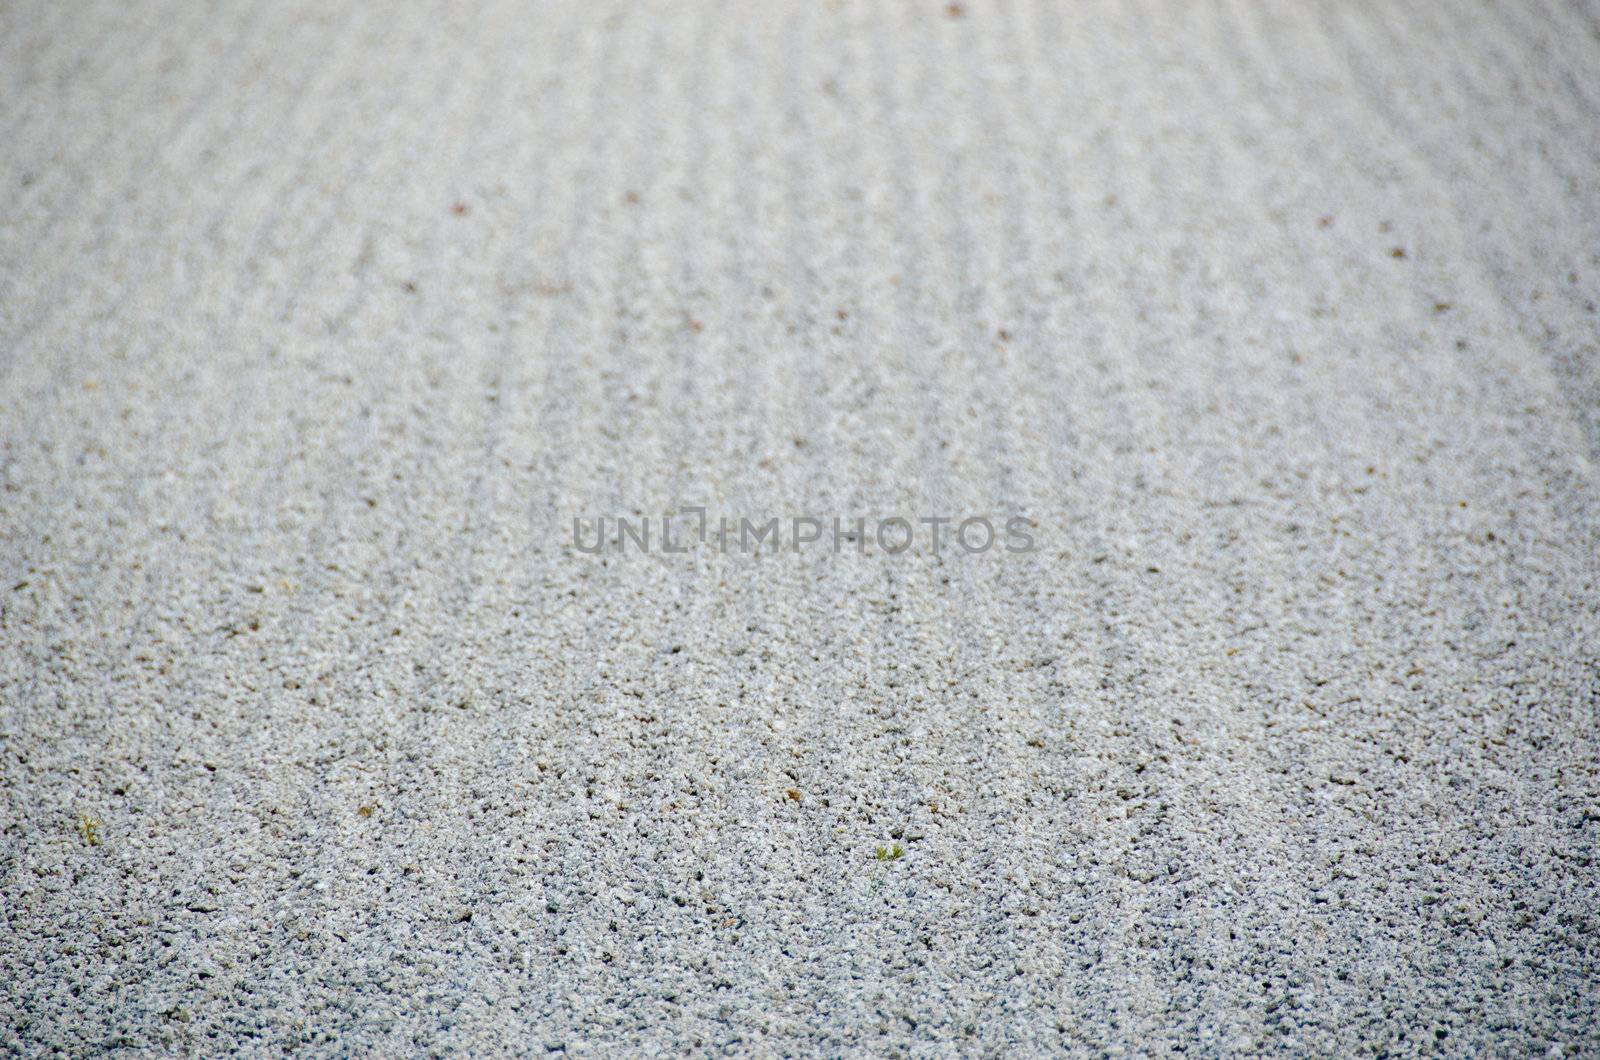 Background pattern of gravel in a japanese zen stone garden